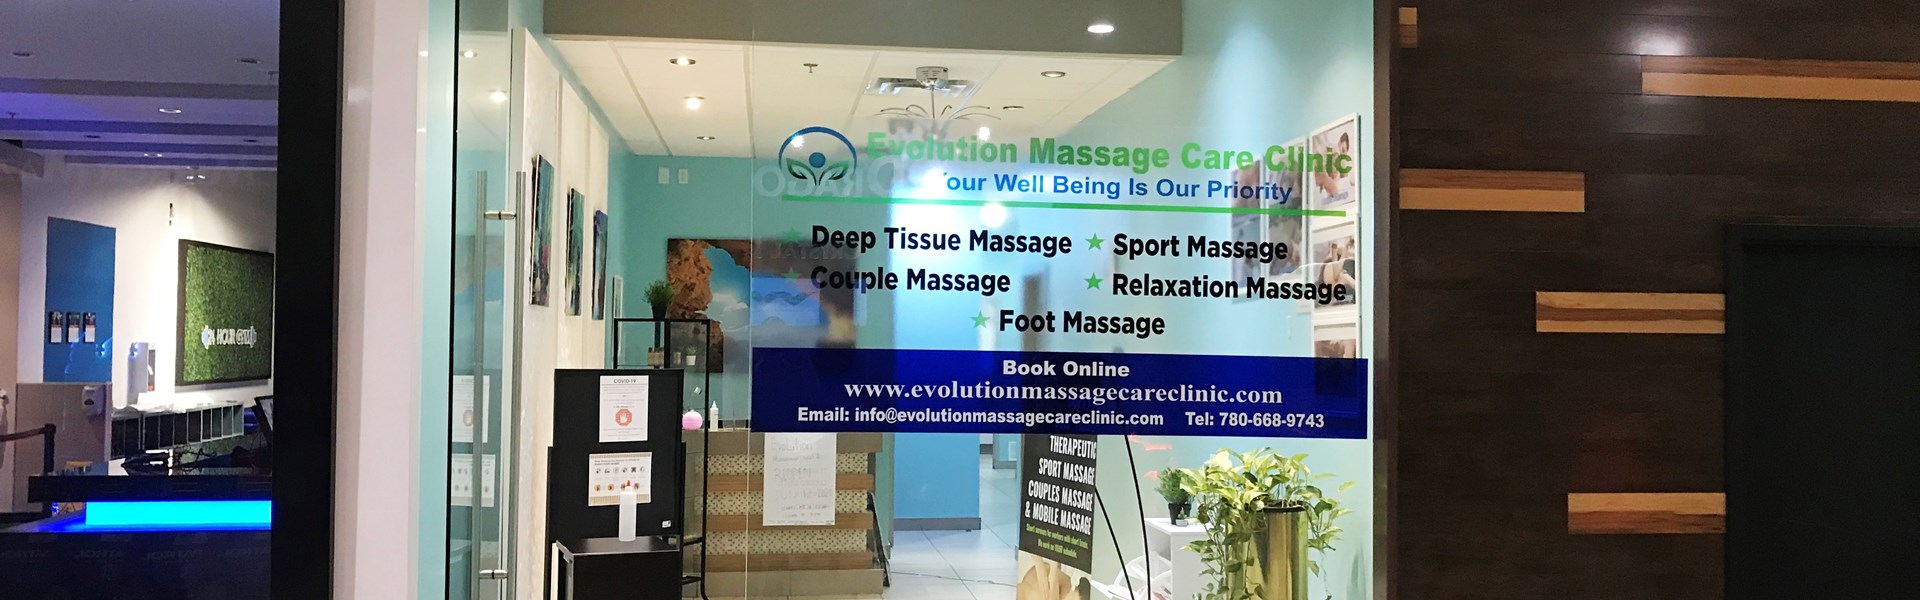 Evolution Massage Care Clinic